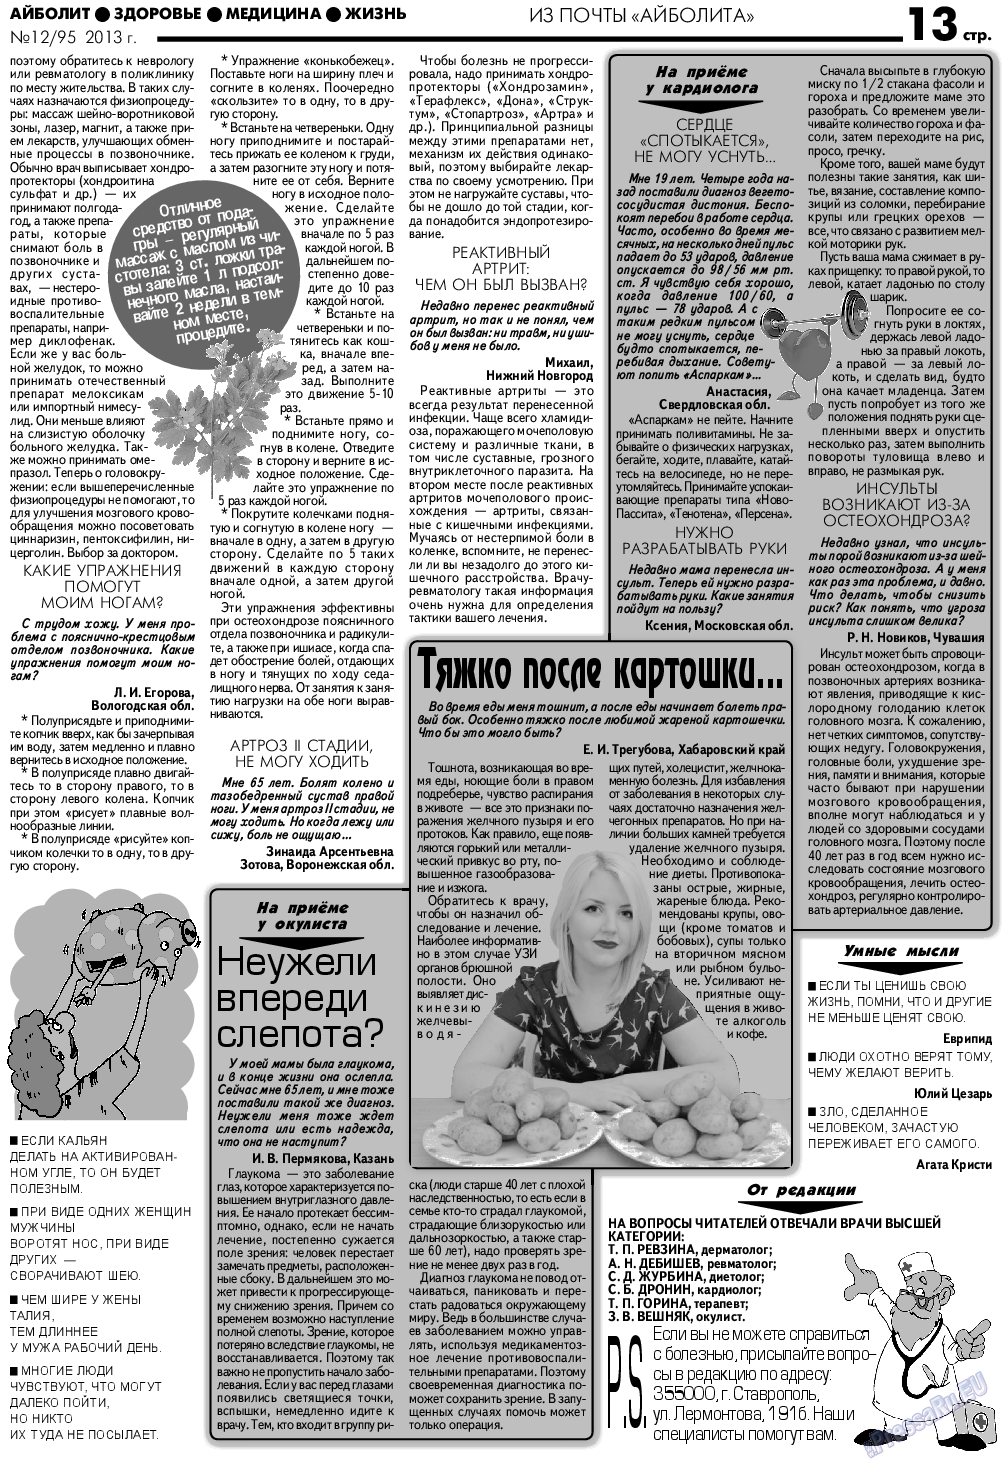 АйБолит (газета). 2013 год, номер 12, стр. 13